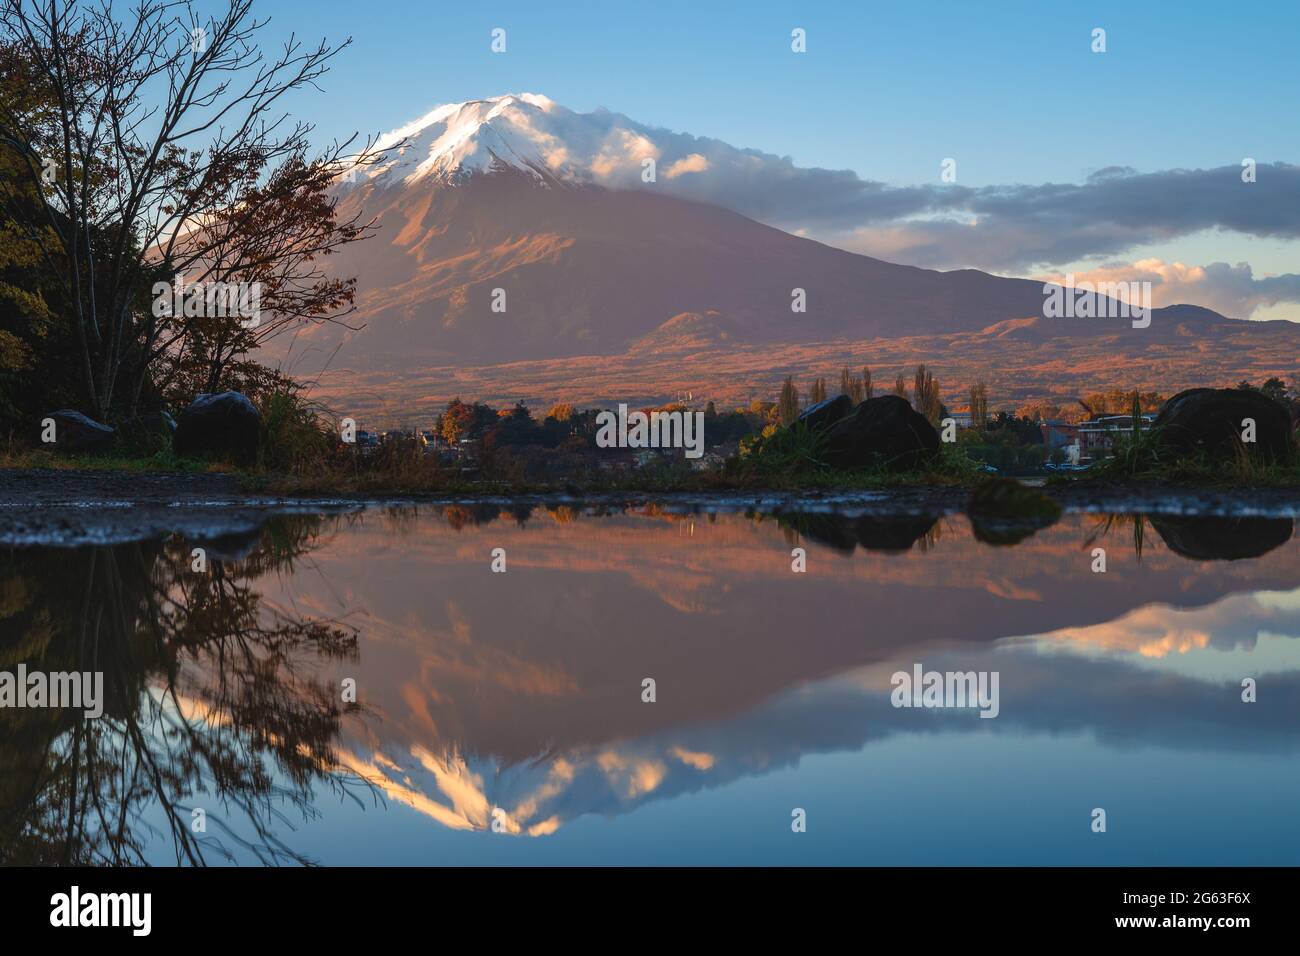 Scenery of Mount Fuji and Lake Kawaguchi at Yamanashi in japan Stock Photo